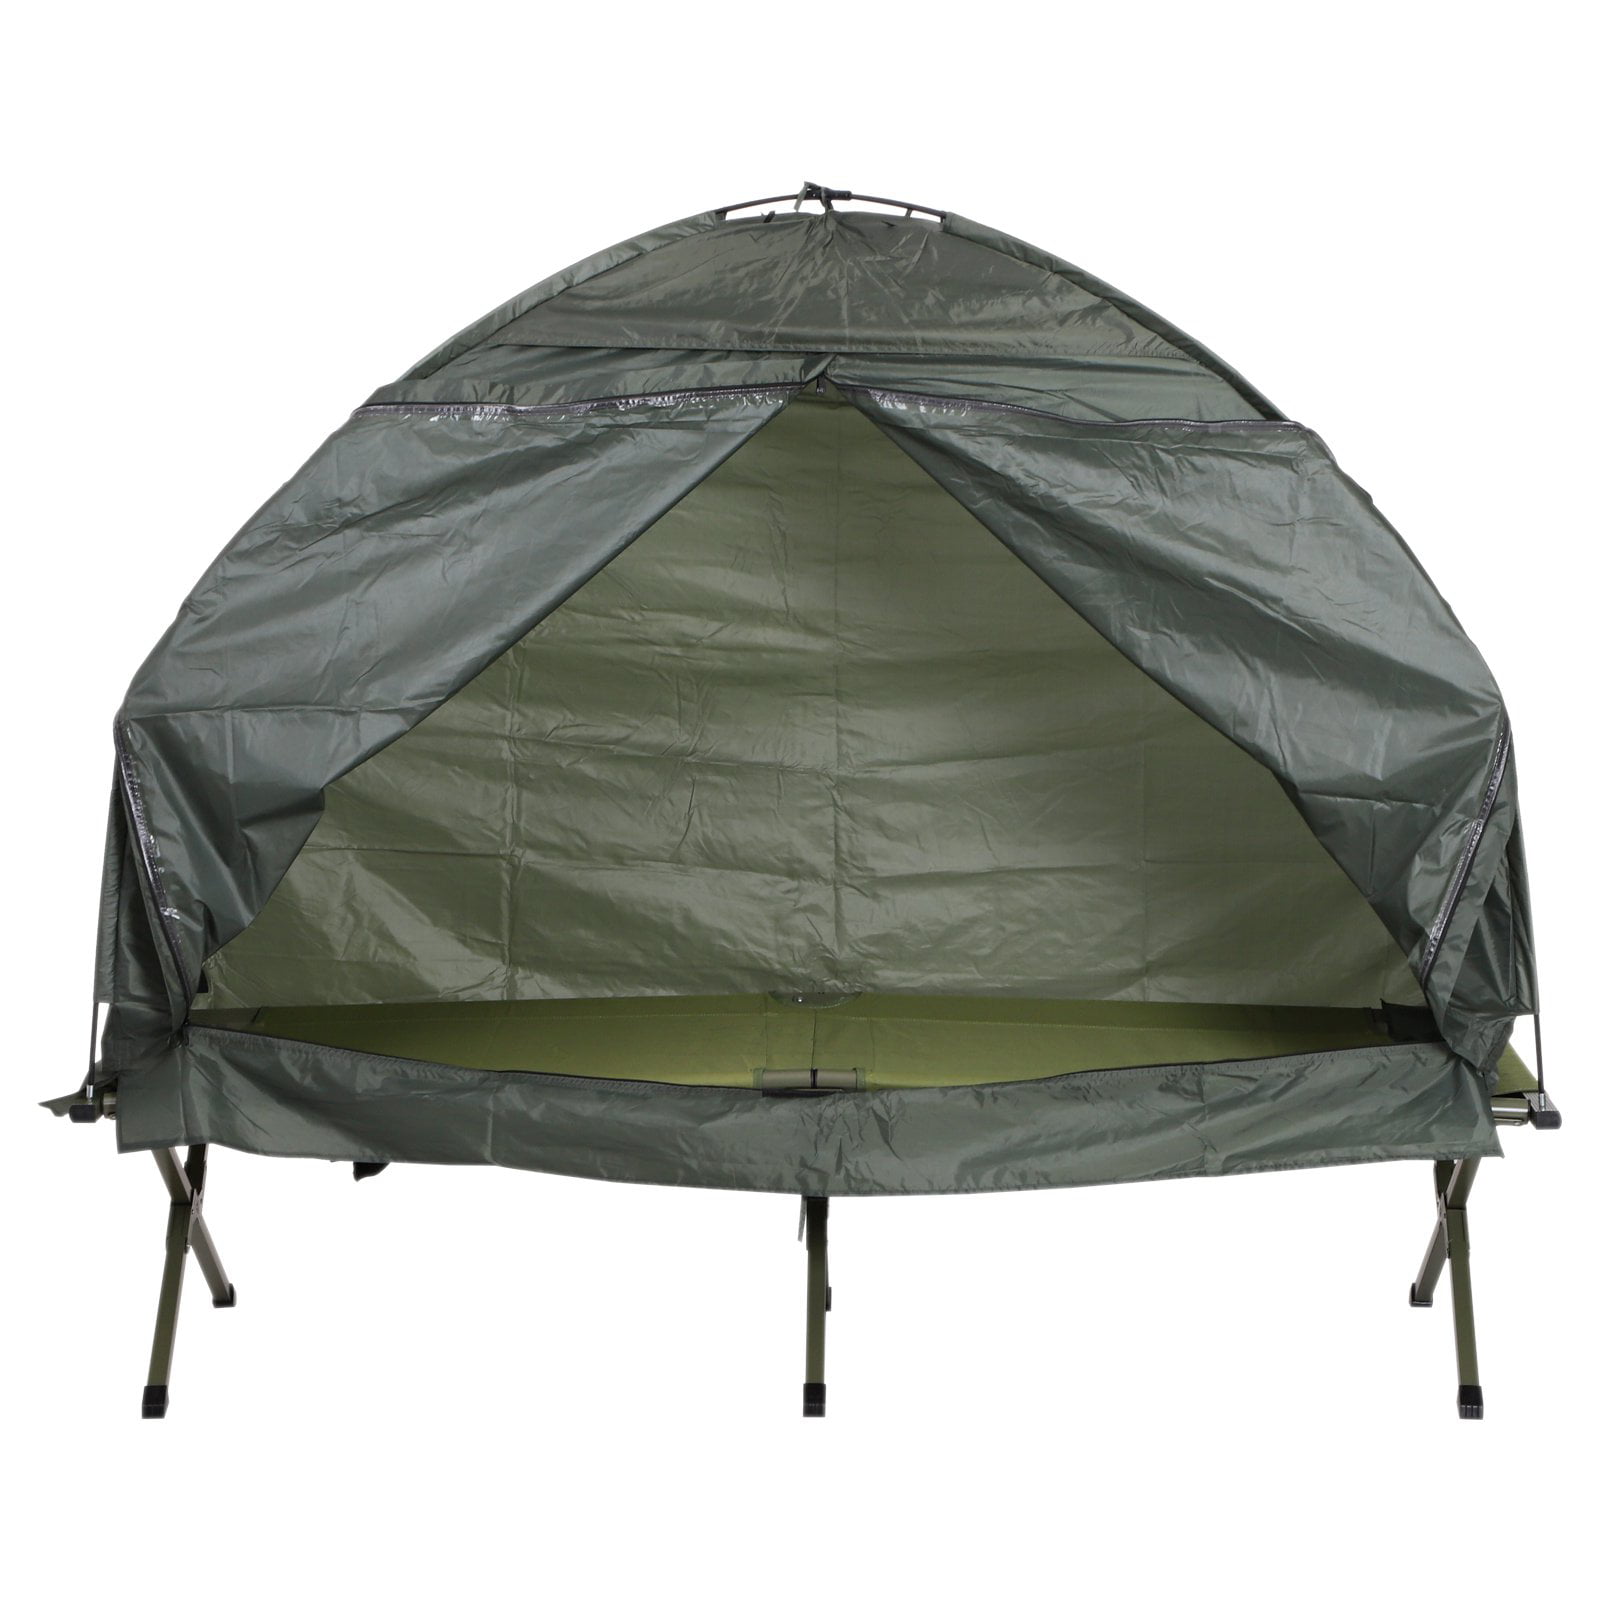 Single 1 Person Folding Camping Waterproof Tent Cot Bed Raised Mat Hiking Bag 